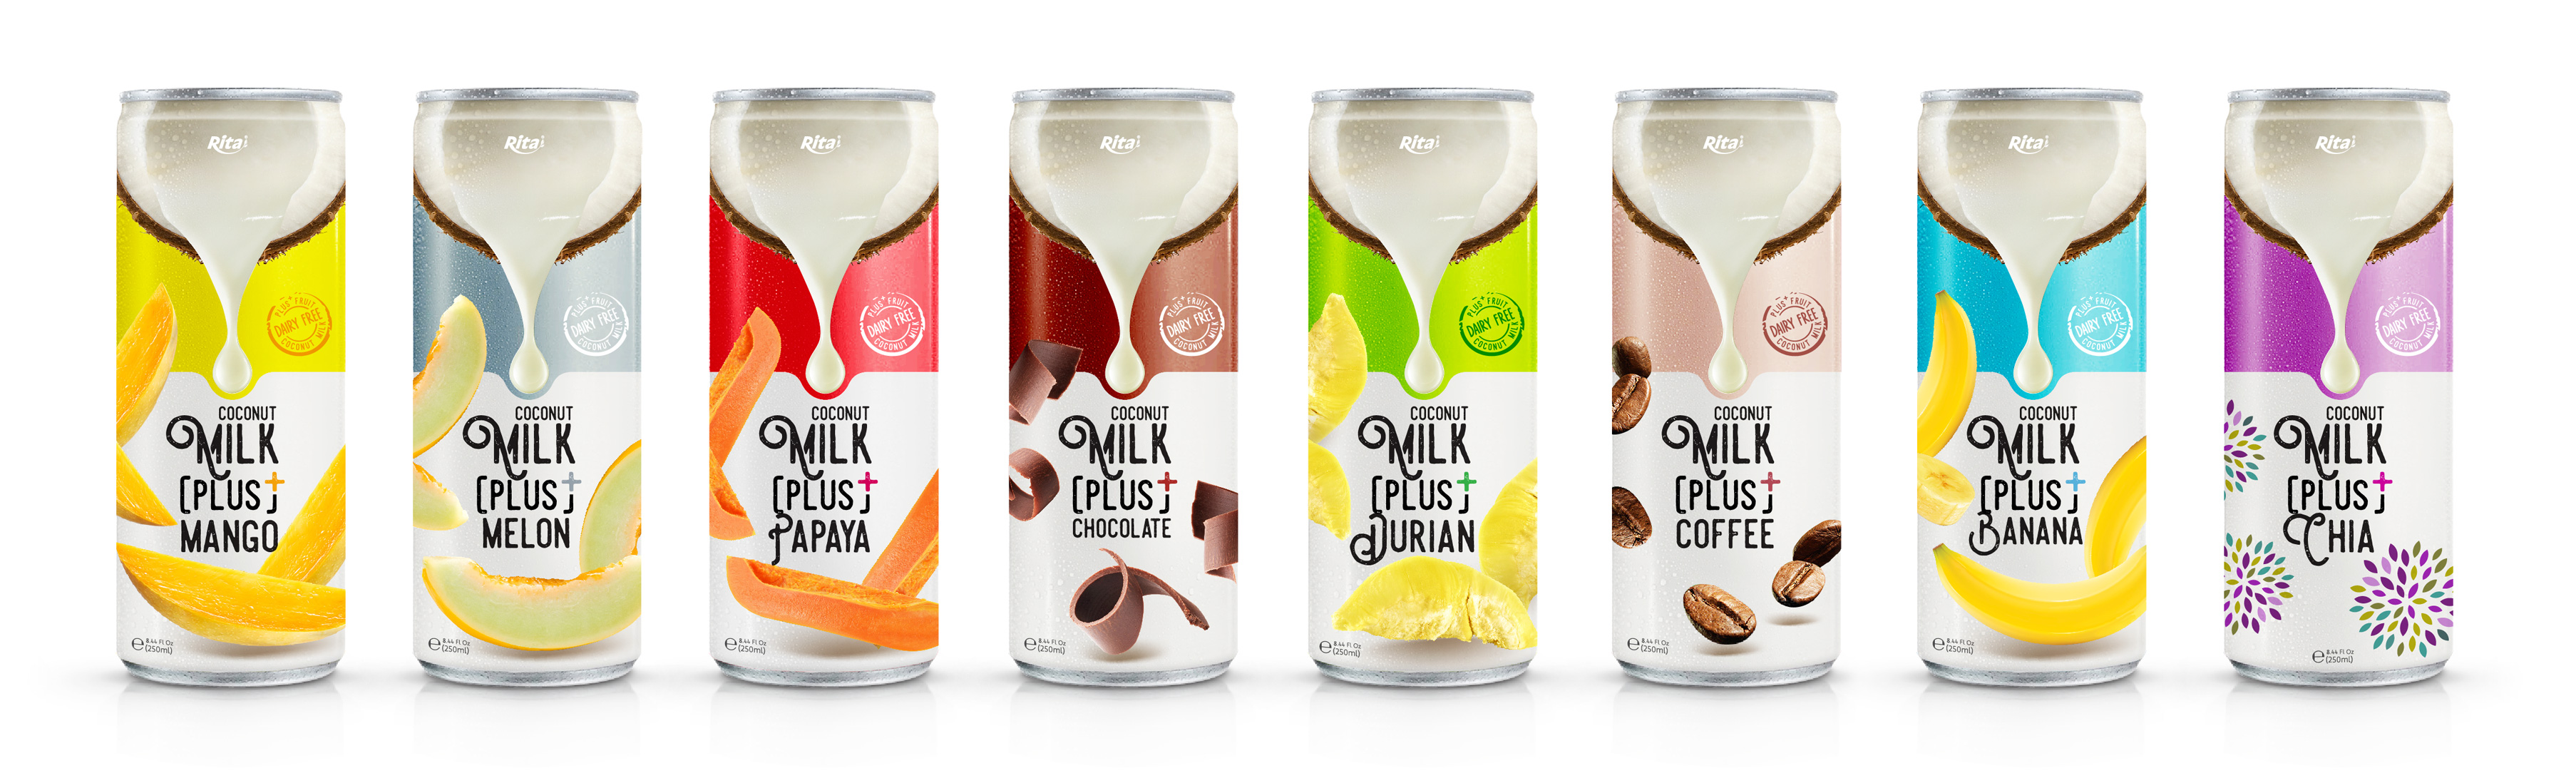 Coco Milk Plus coffee 250ml